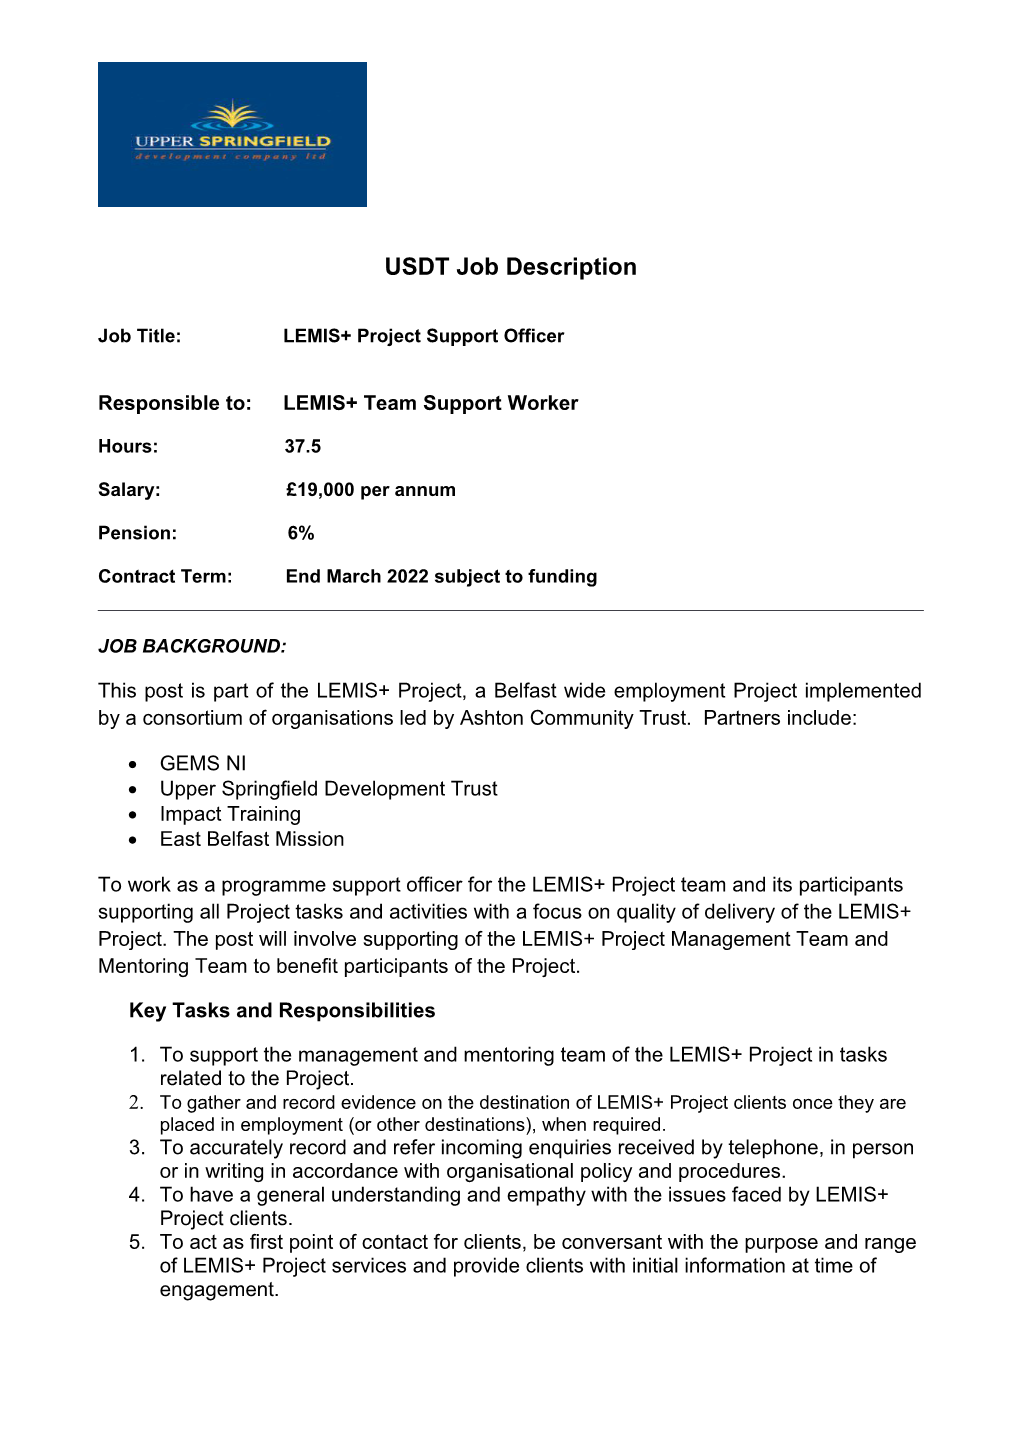 Job Title:LEMIS+Projectsupport Officer